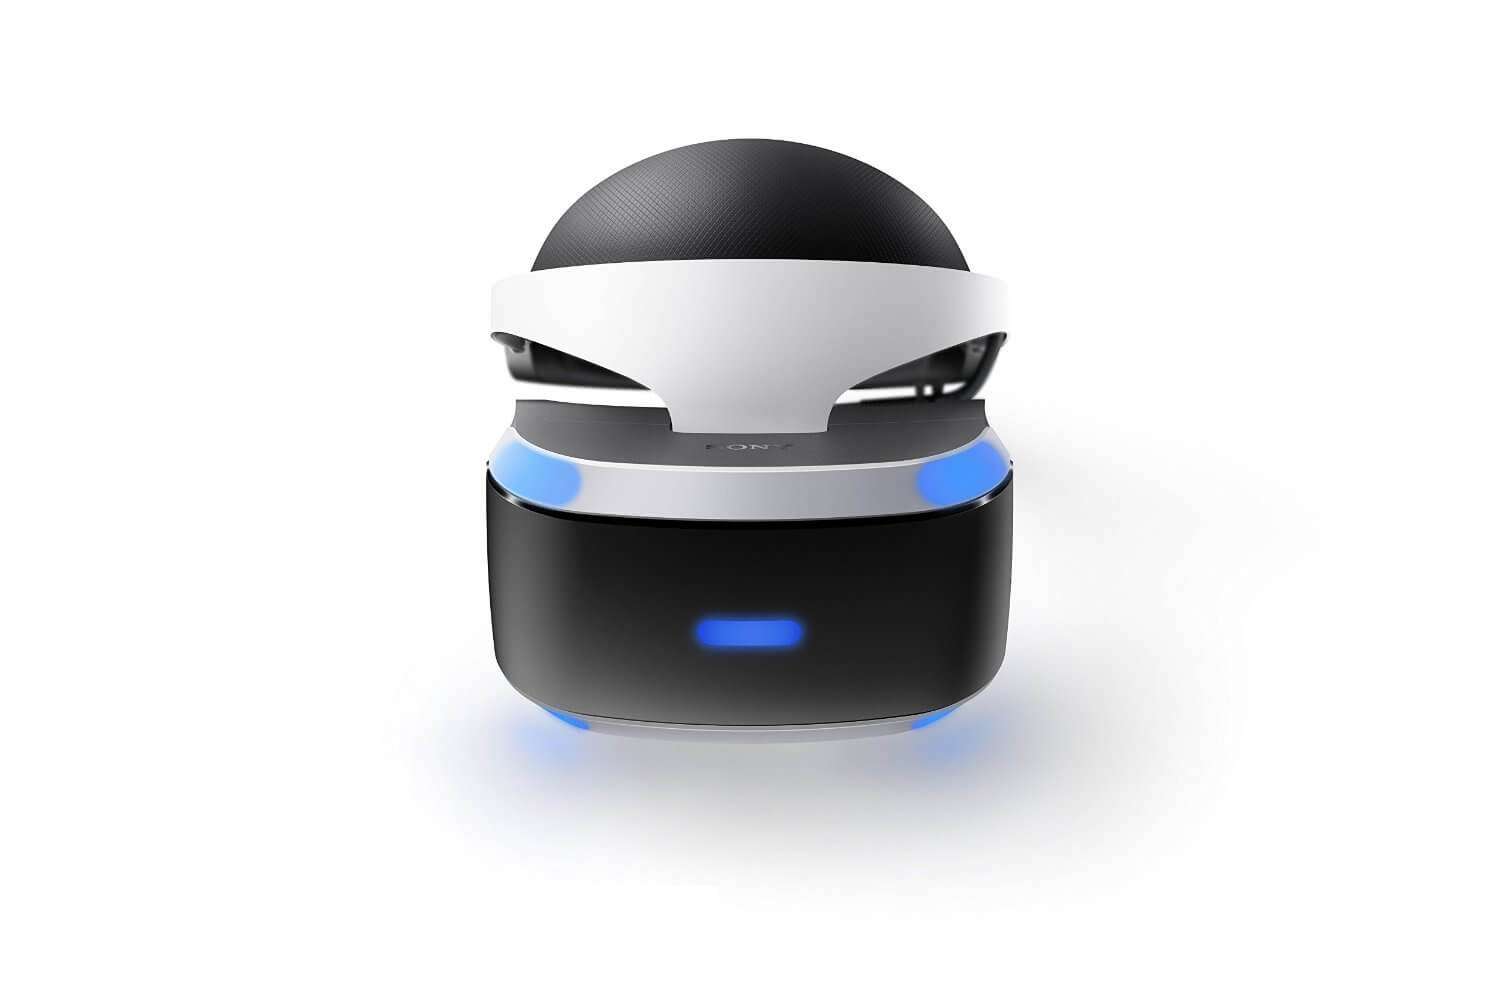 Sony PlayStation VR Headset